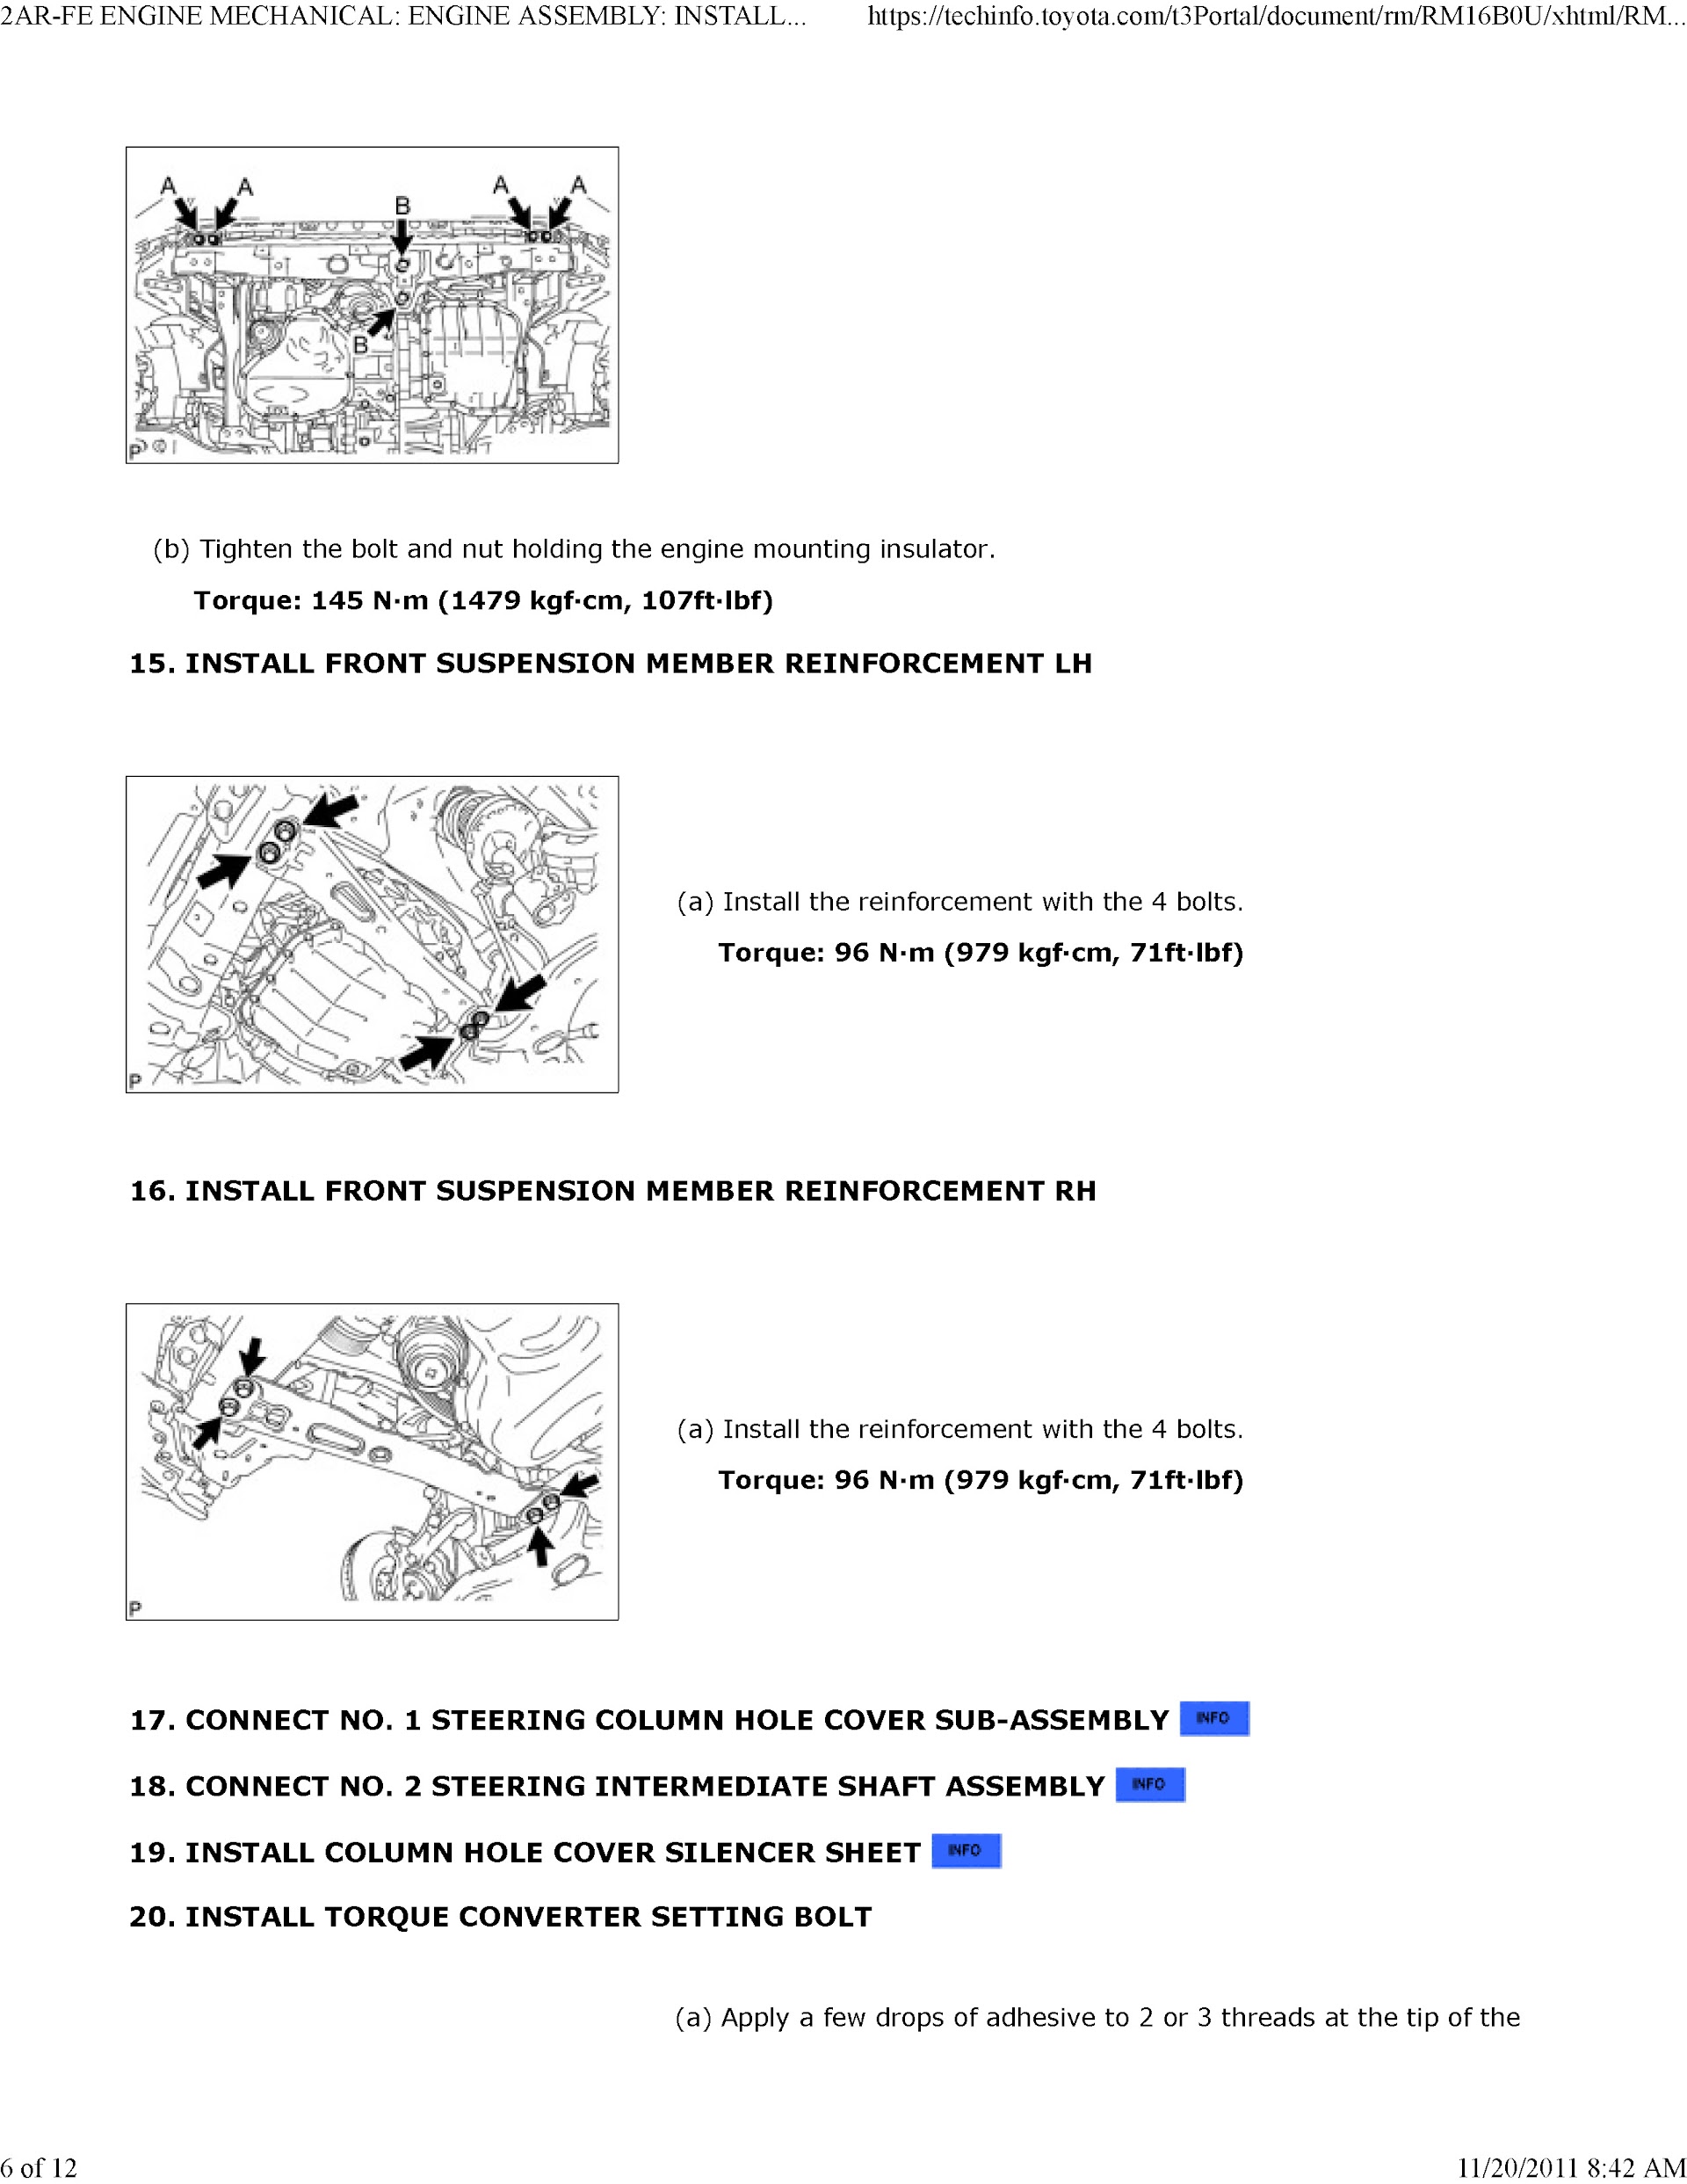 2011-2012 Toyota RAV4 Repair Manual 2AR-FE Engine Mechanical Engine Assembly Installation